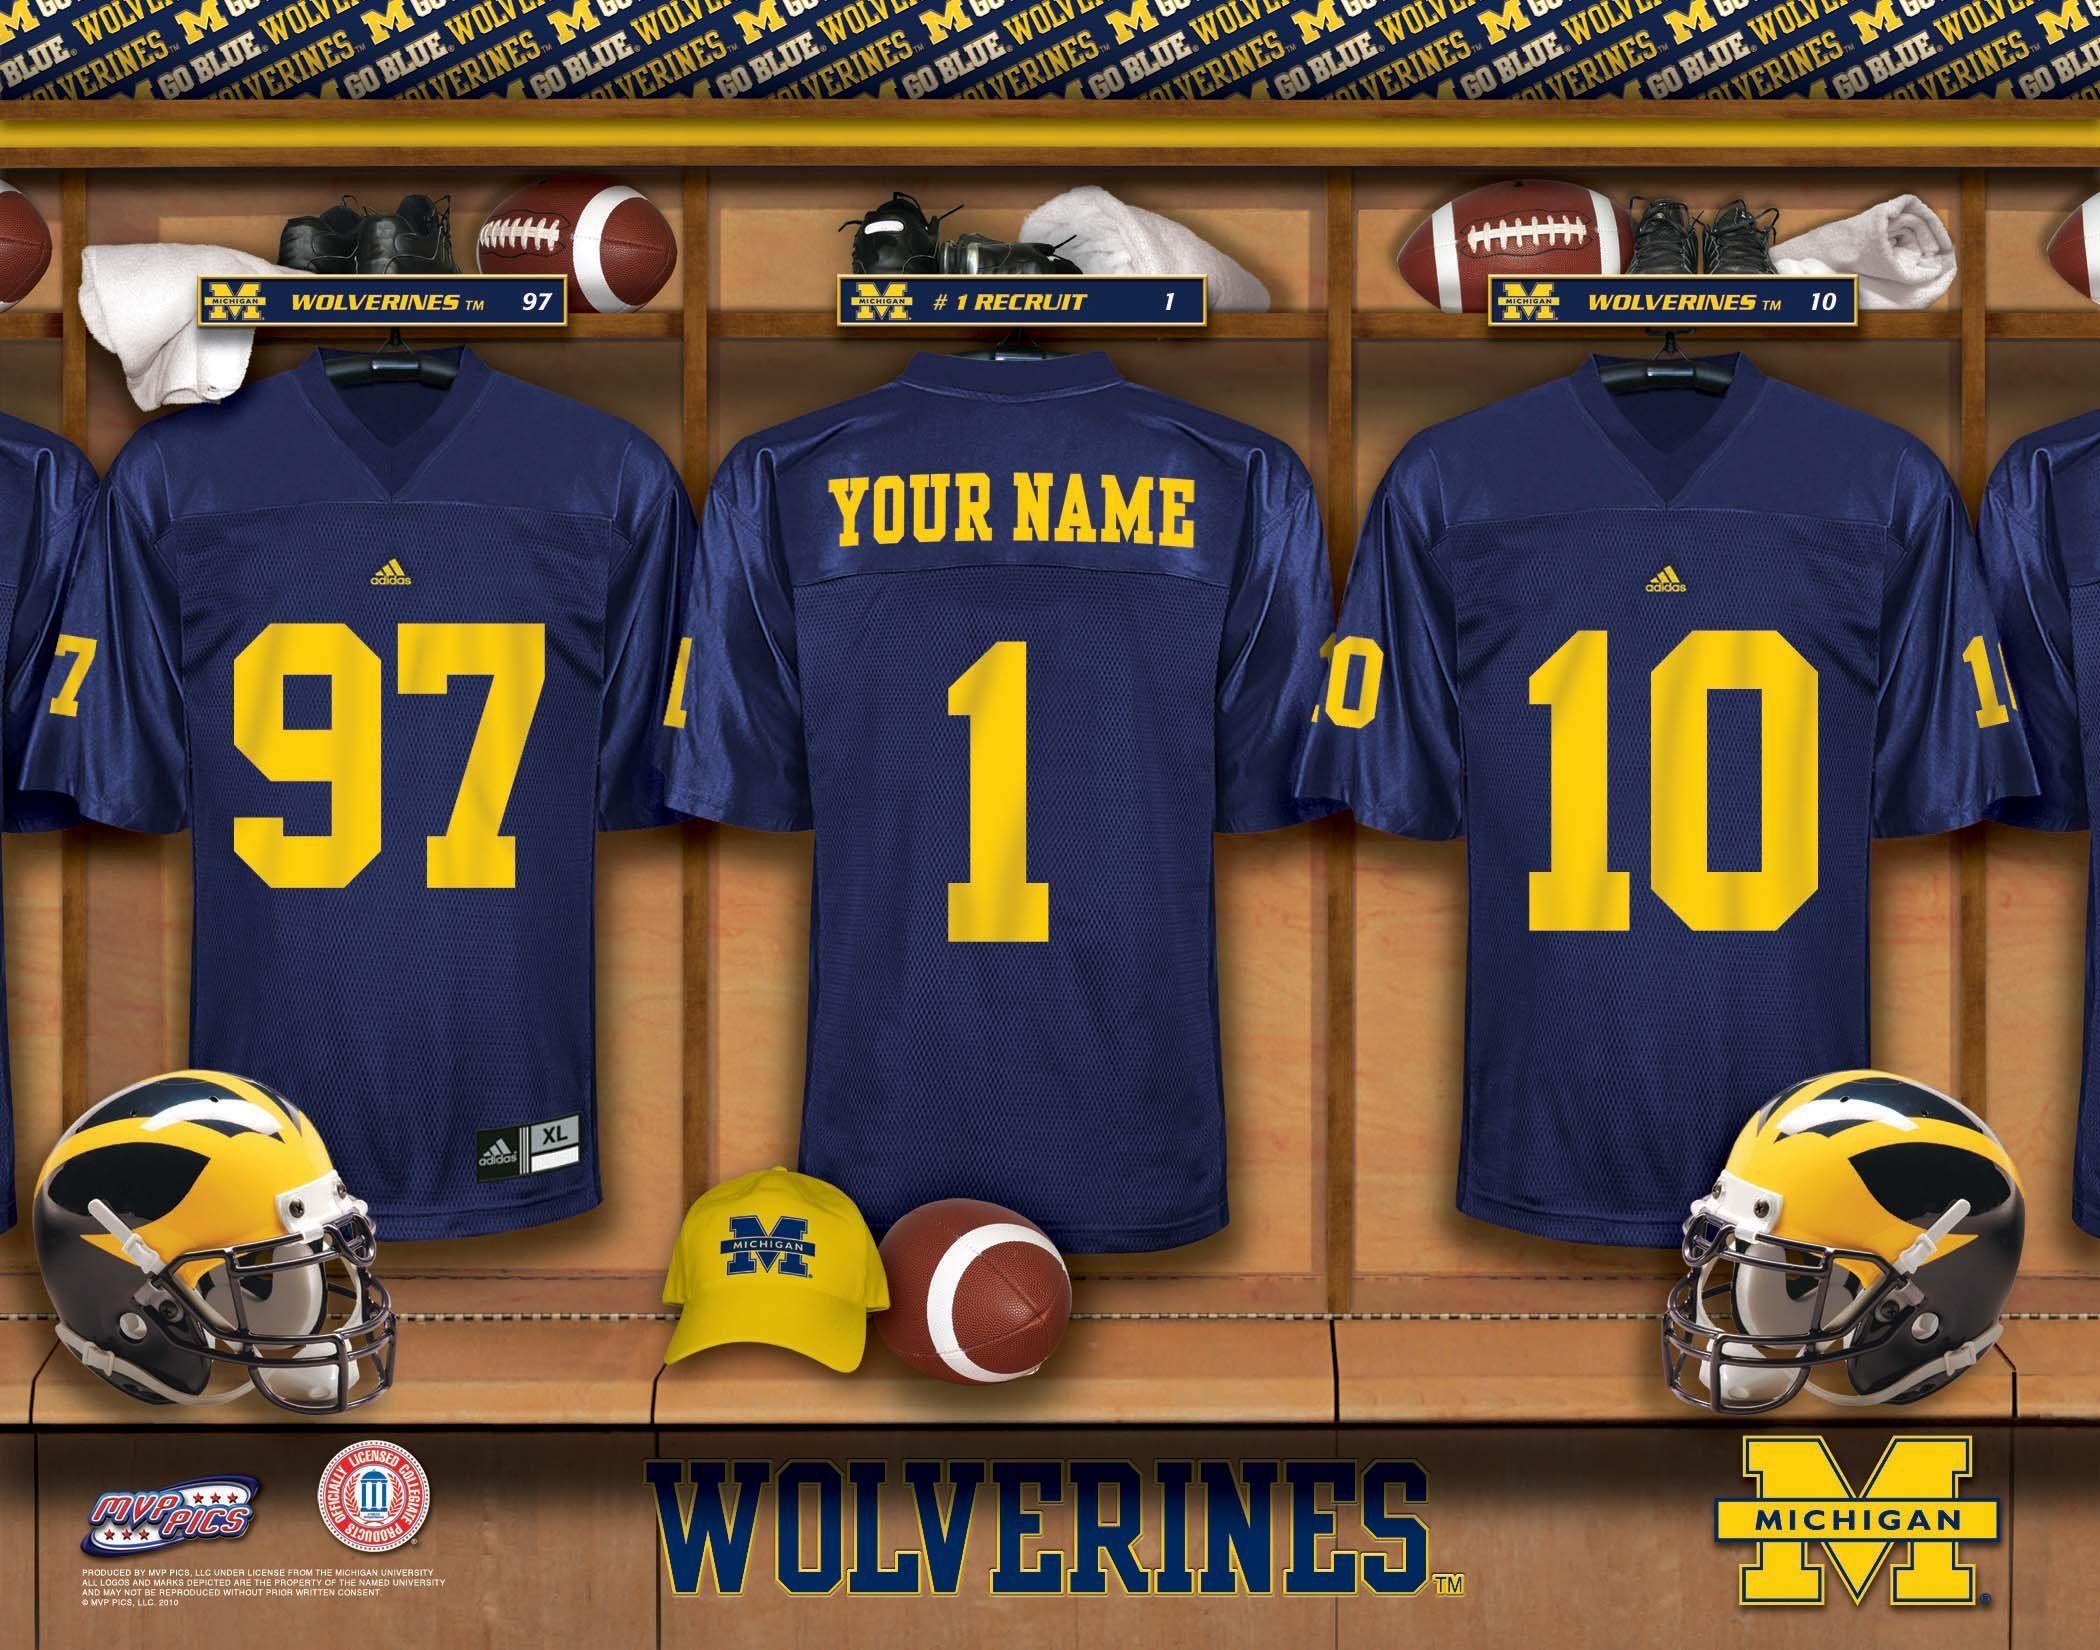 Michigan Wolverines Football Wallpaper Group. HD Wallpaper